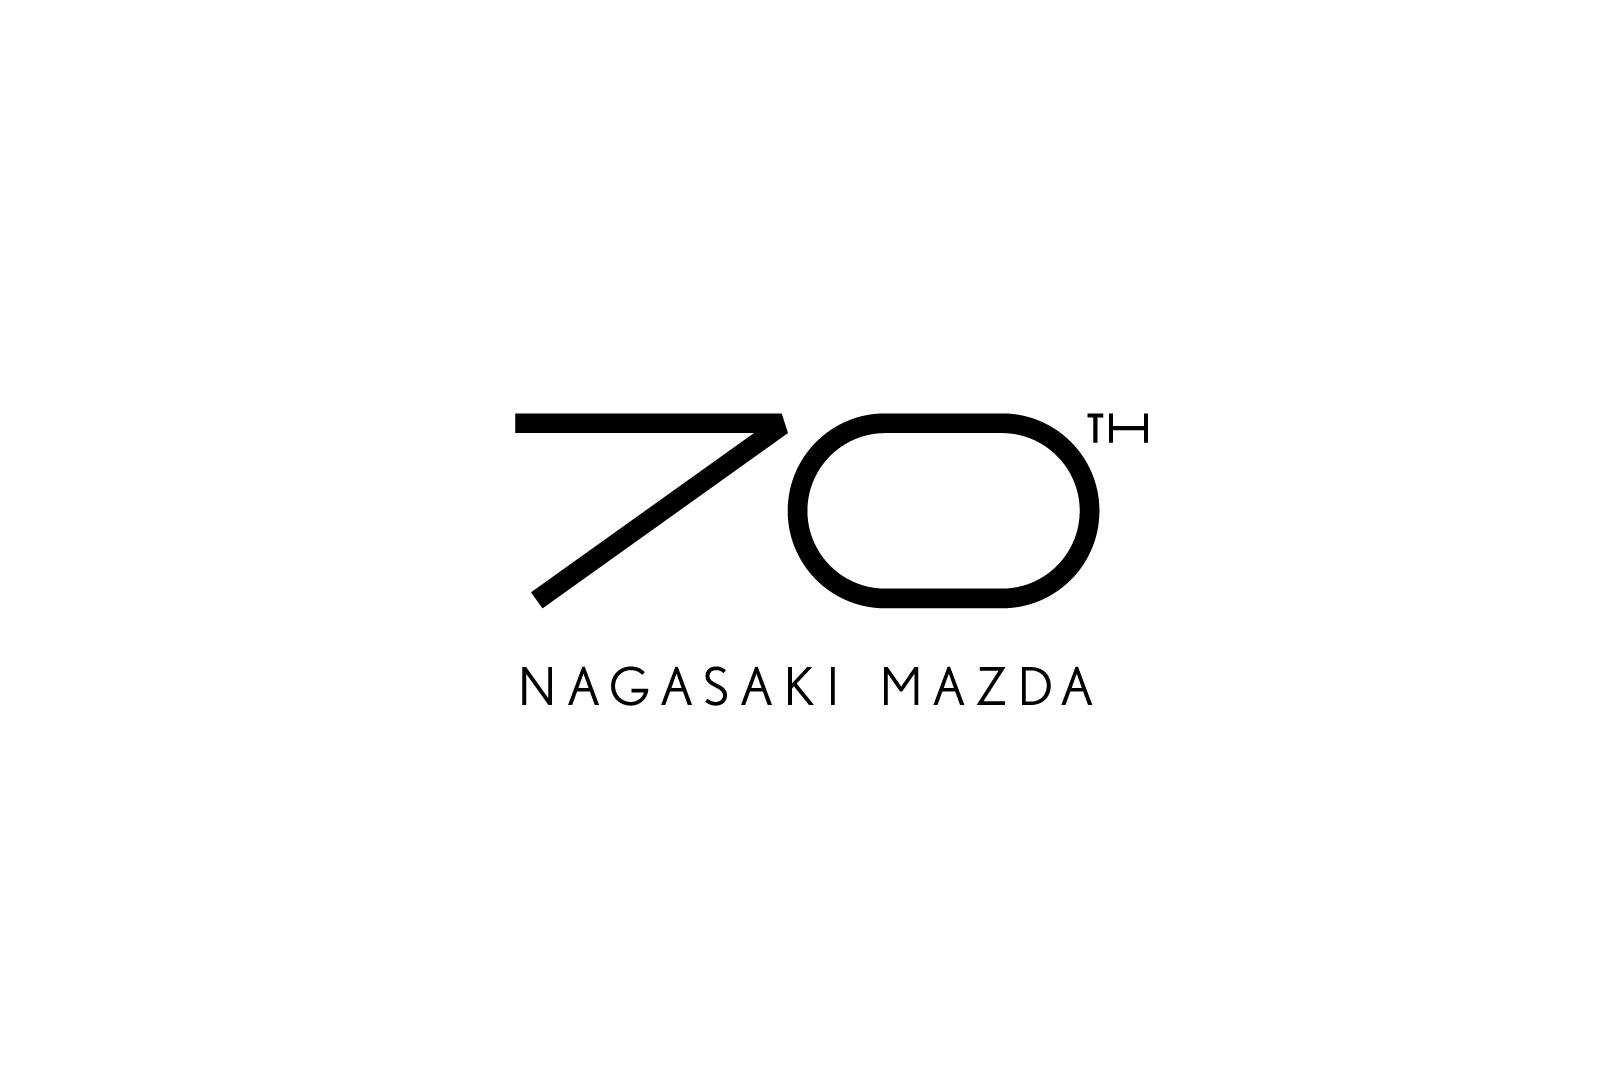 Nagasaki Mazda 70th Anniversary